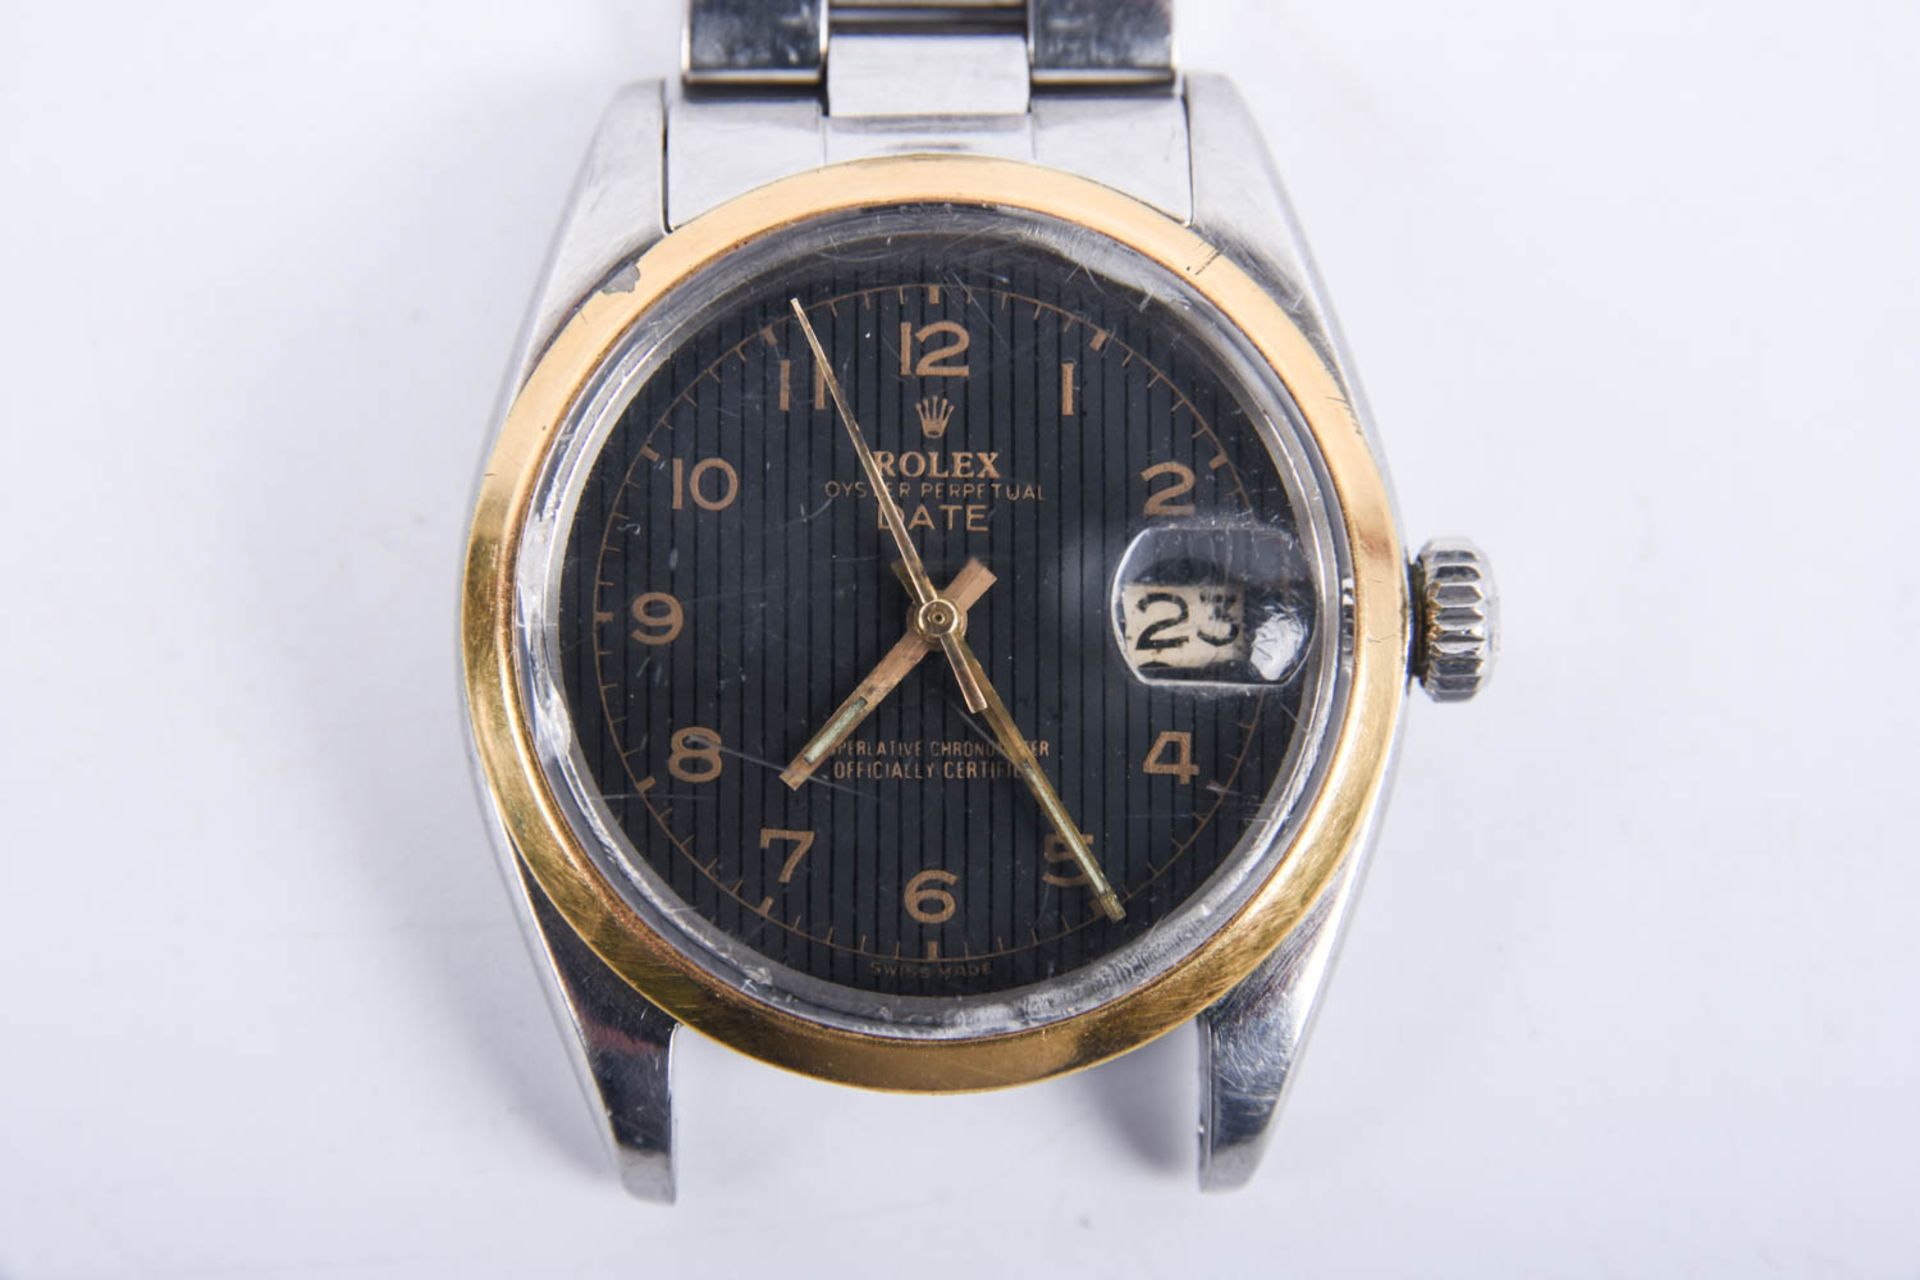 Rolex Cyster Perpetual Date Herrenuhr, 1940er Jahre, Ref. 1500